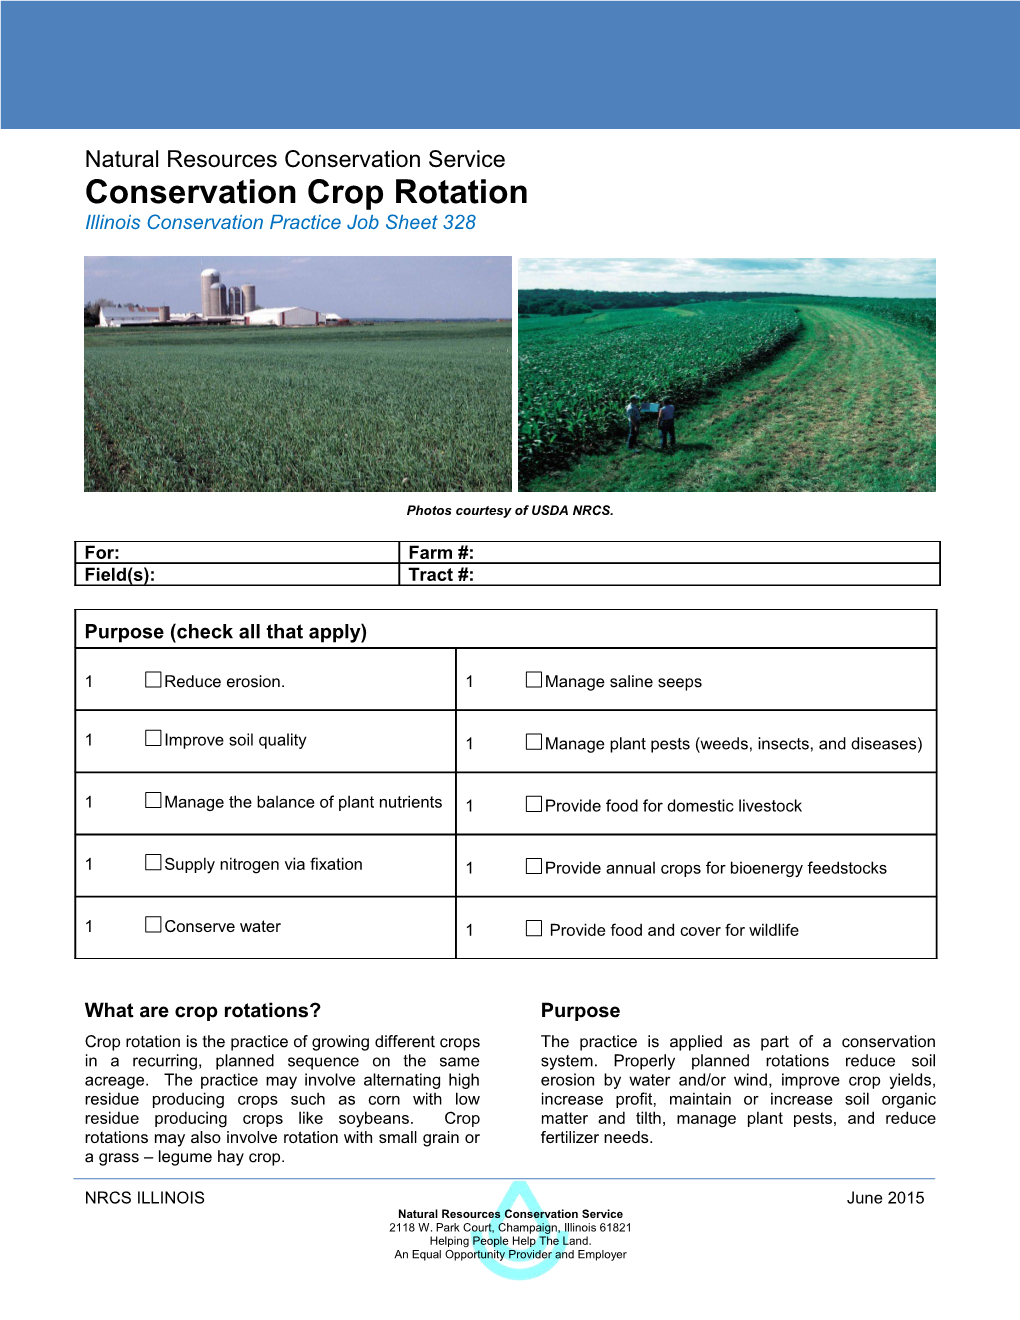 Conservation Crop Rotation